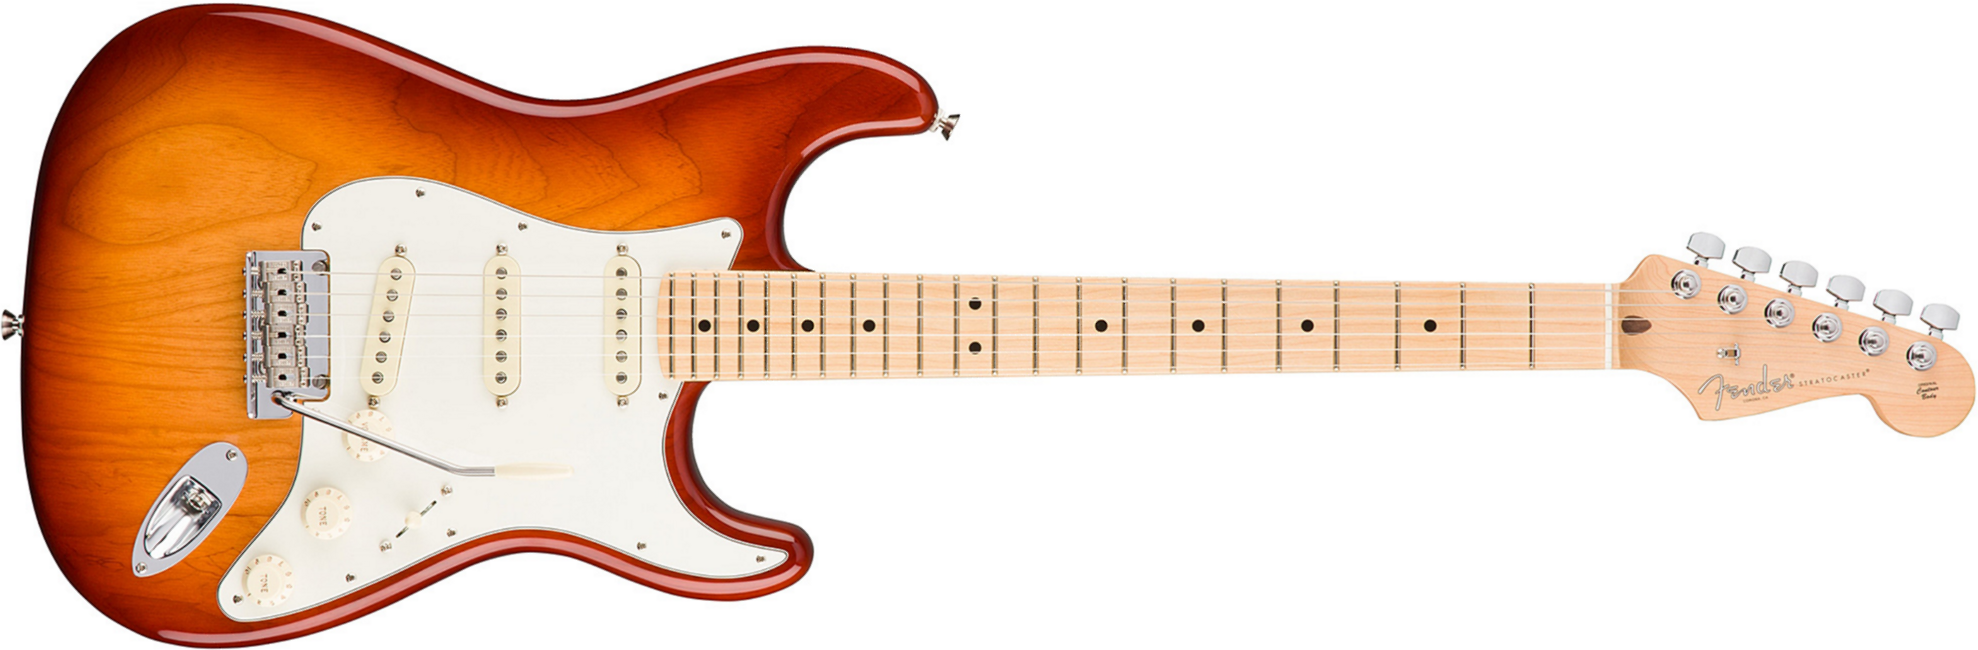 Fender Strat American Professional 2017 3s Usa Mn - Sienna Sunburst - E-Gitarre in Str-Form - Main picture